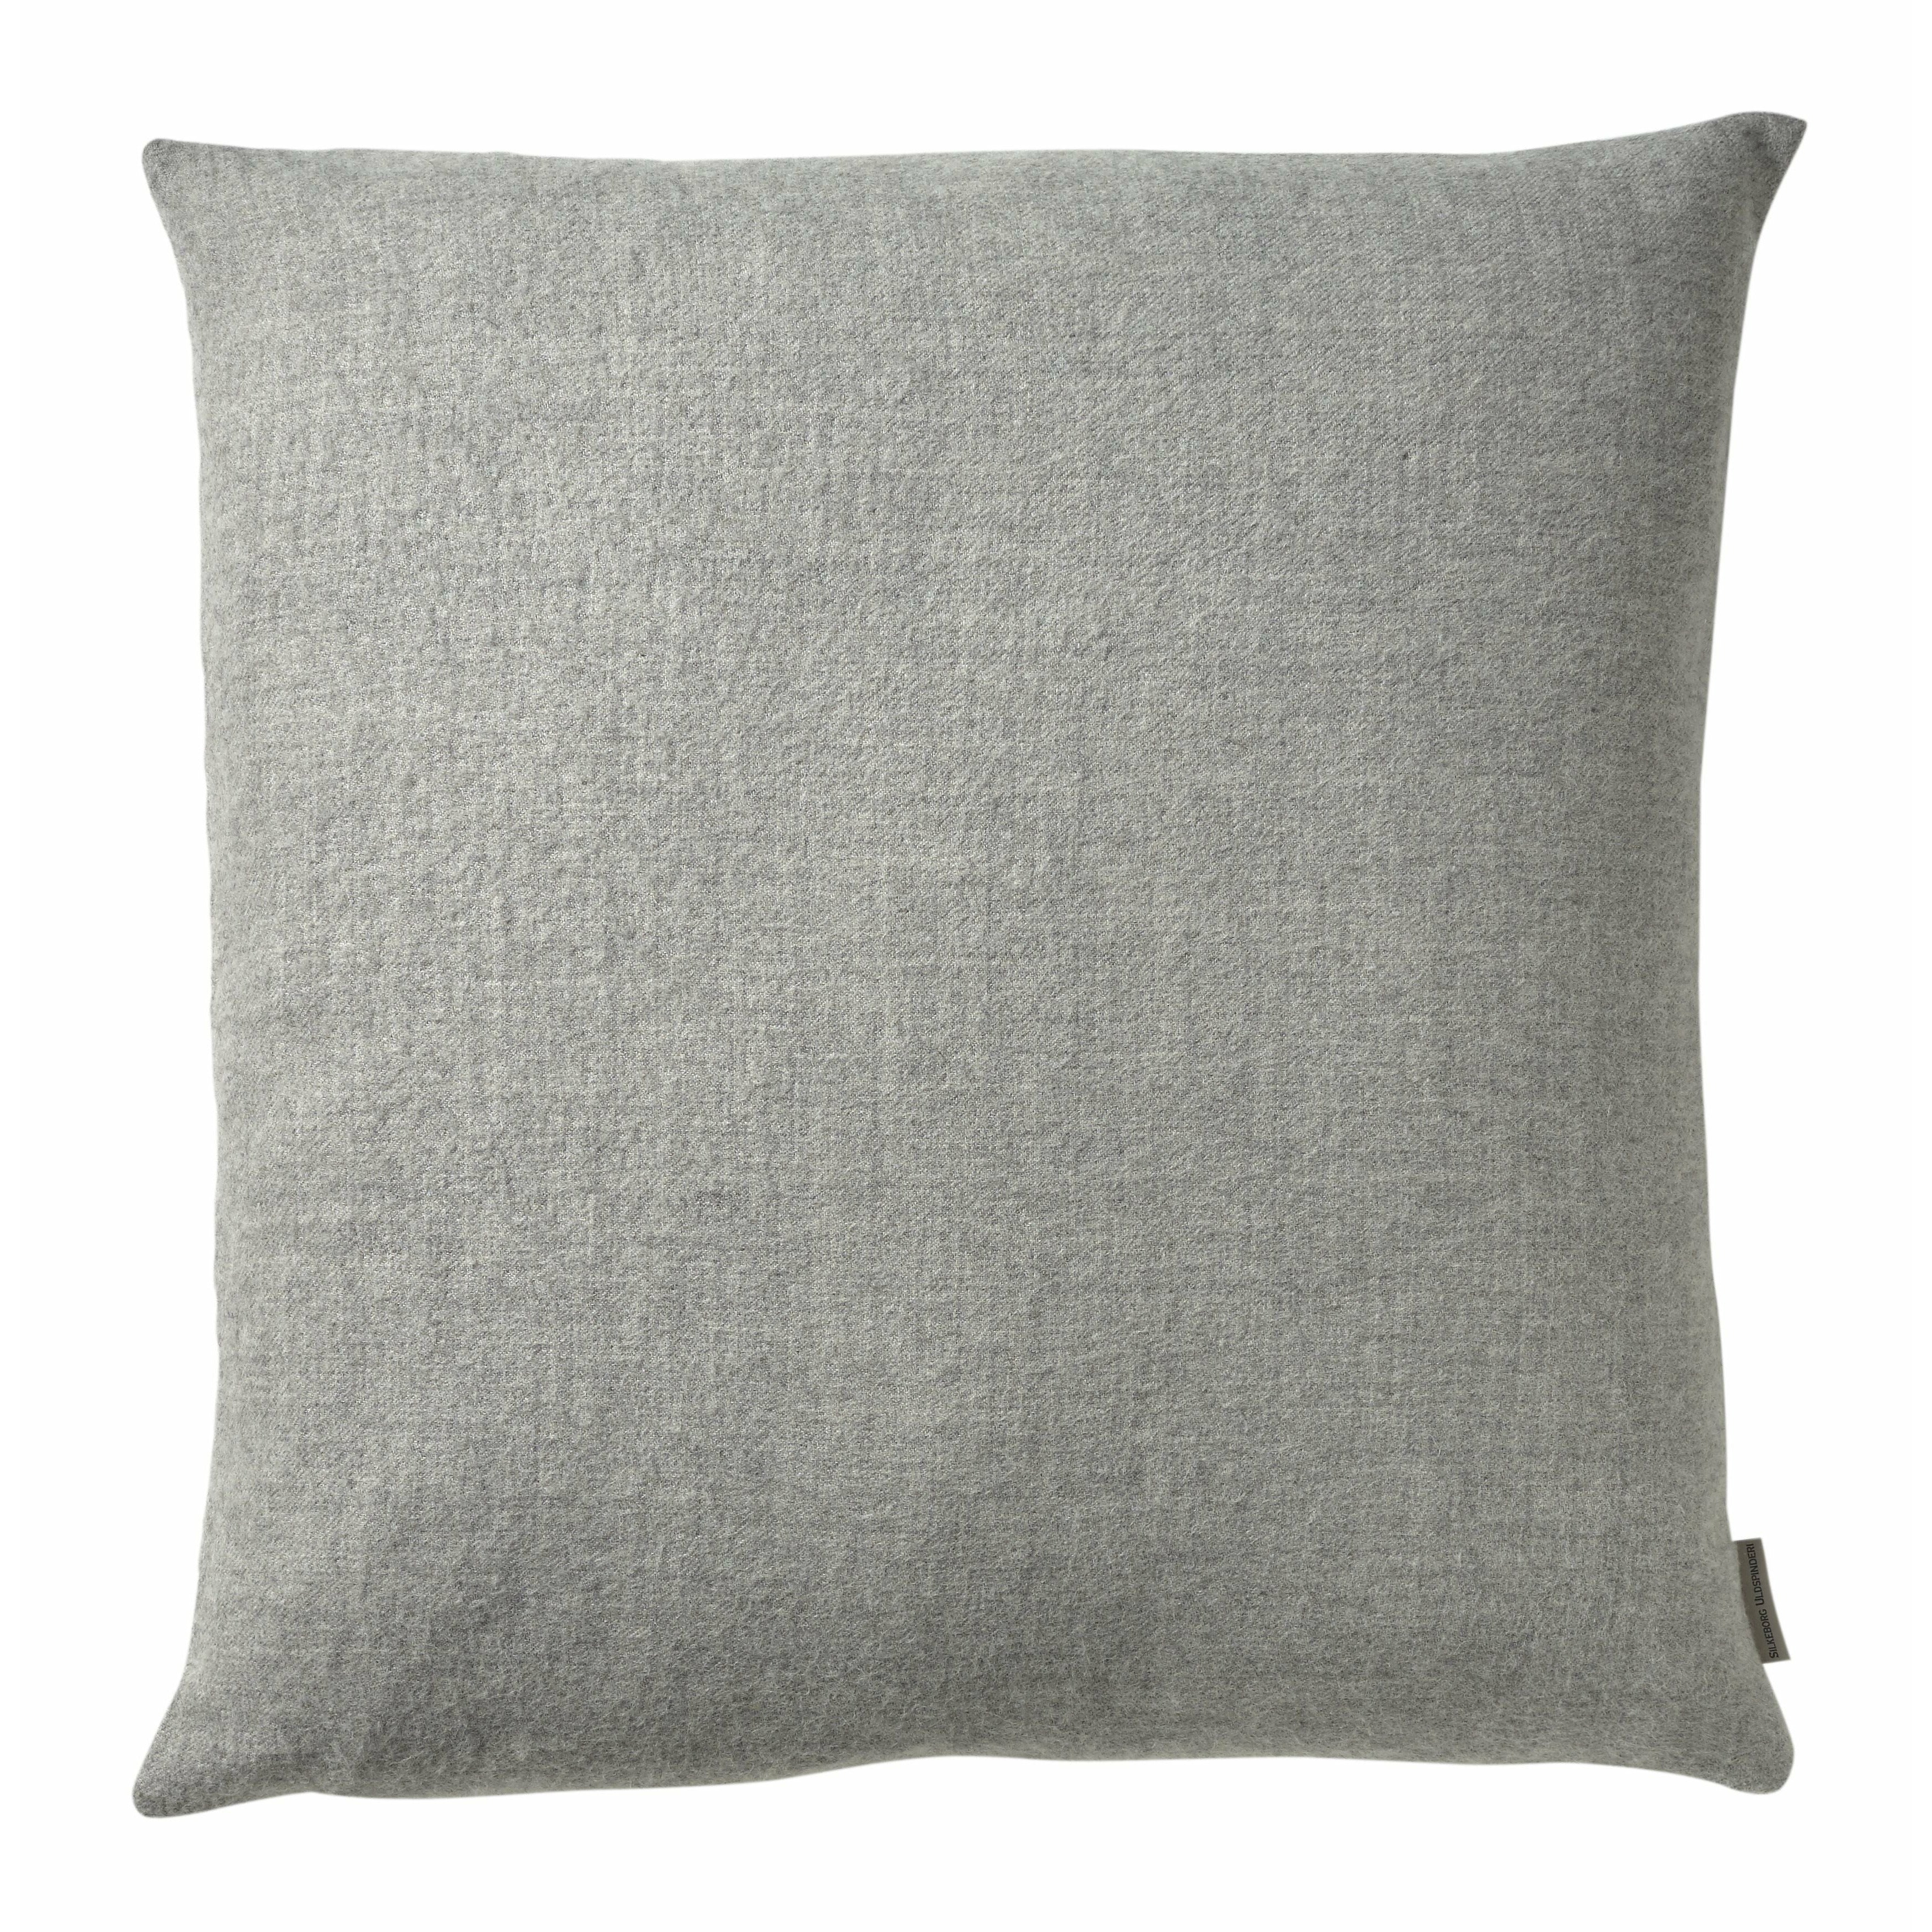 Silkorg Uldspinderi Arequipa Cushion 60 x60 cm, gris claro